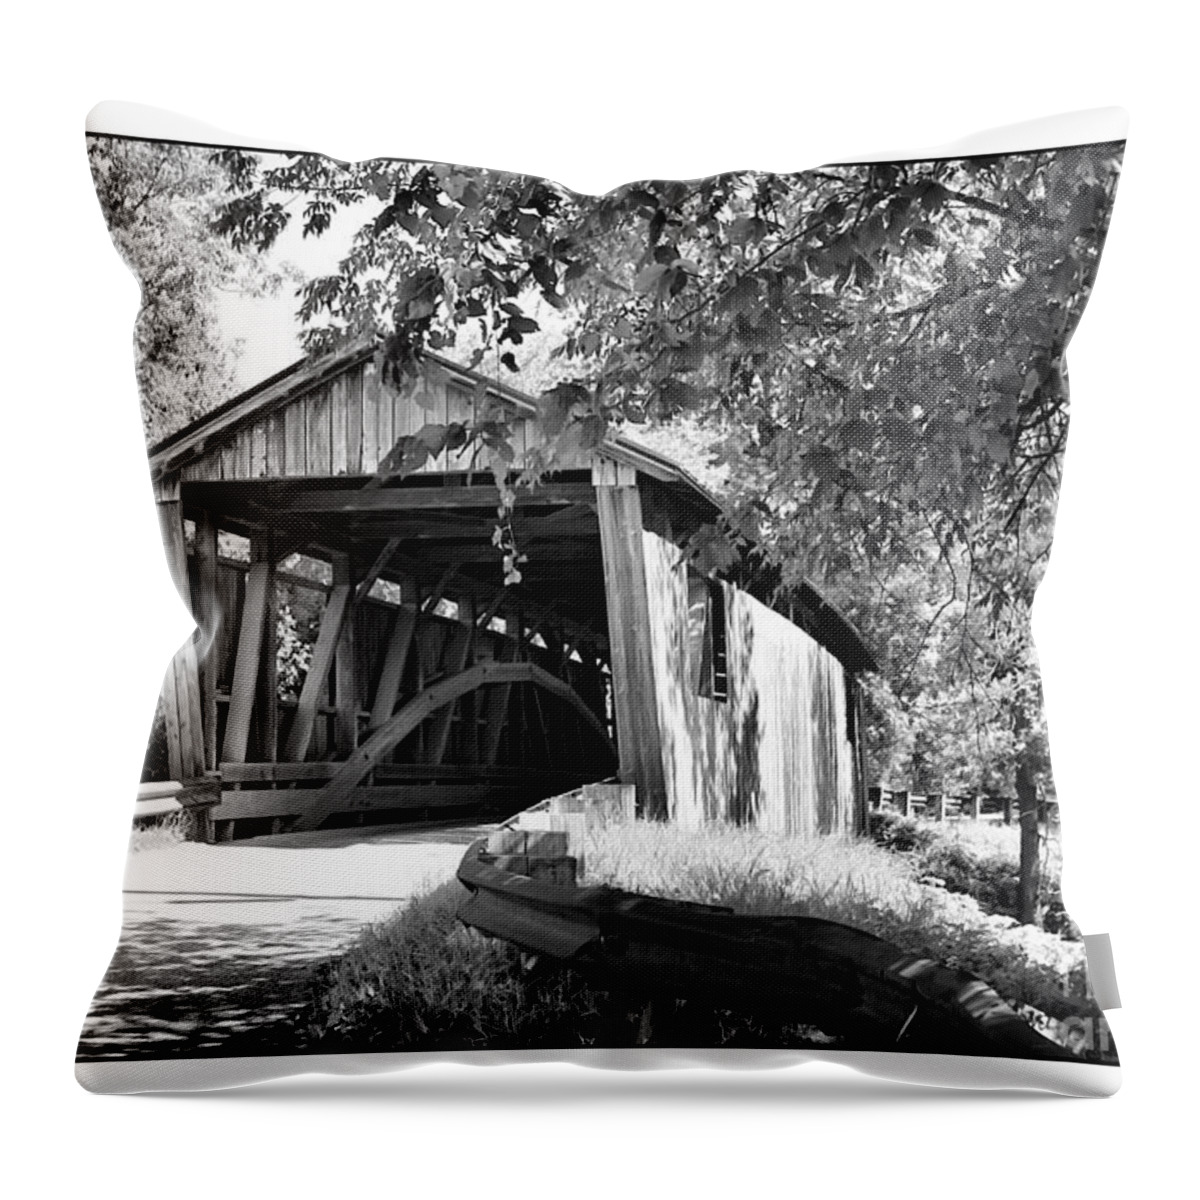 Coveredbridge Throw Pillow featuring the photograph Quinlan Bridge by Deborah Benoit